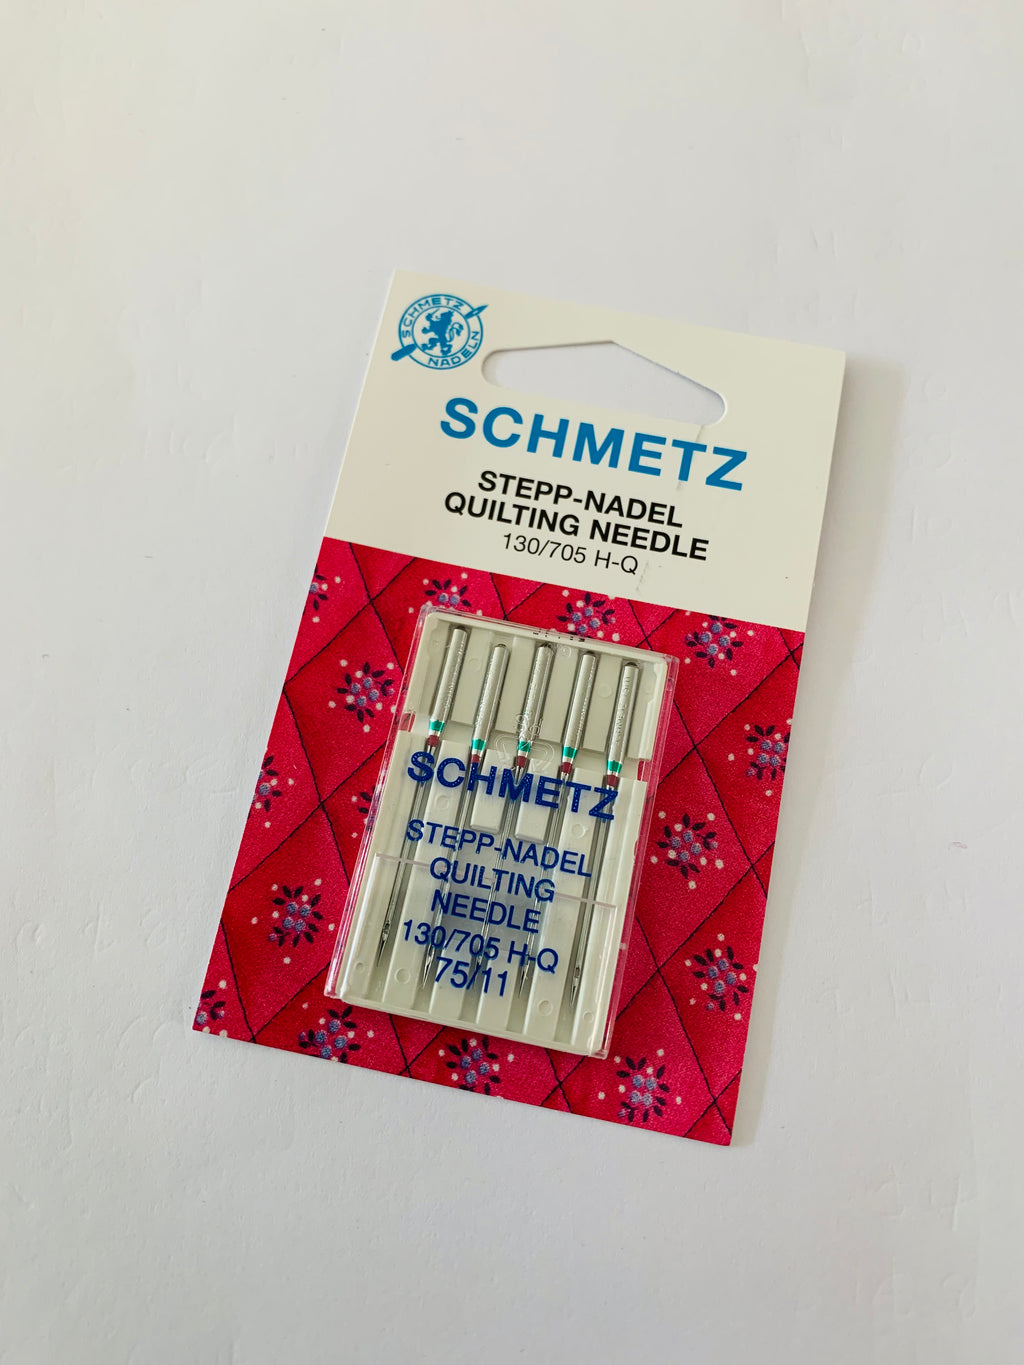 Schmetz quilting needle: 75/11